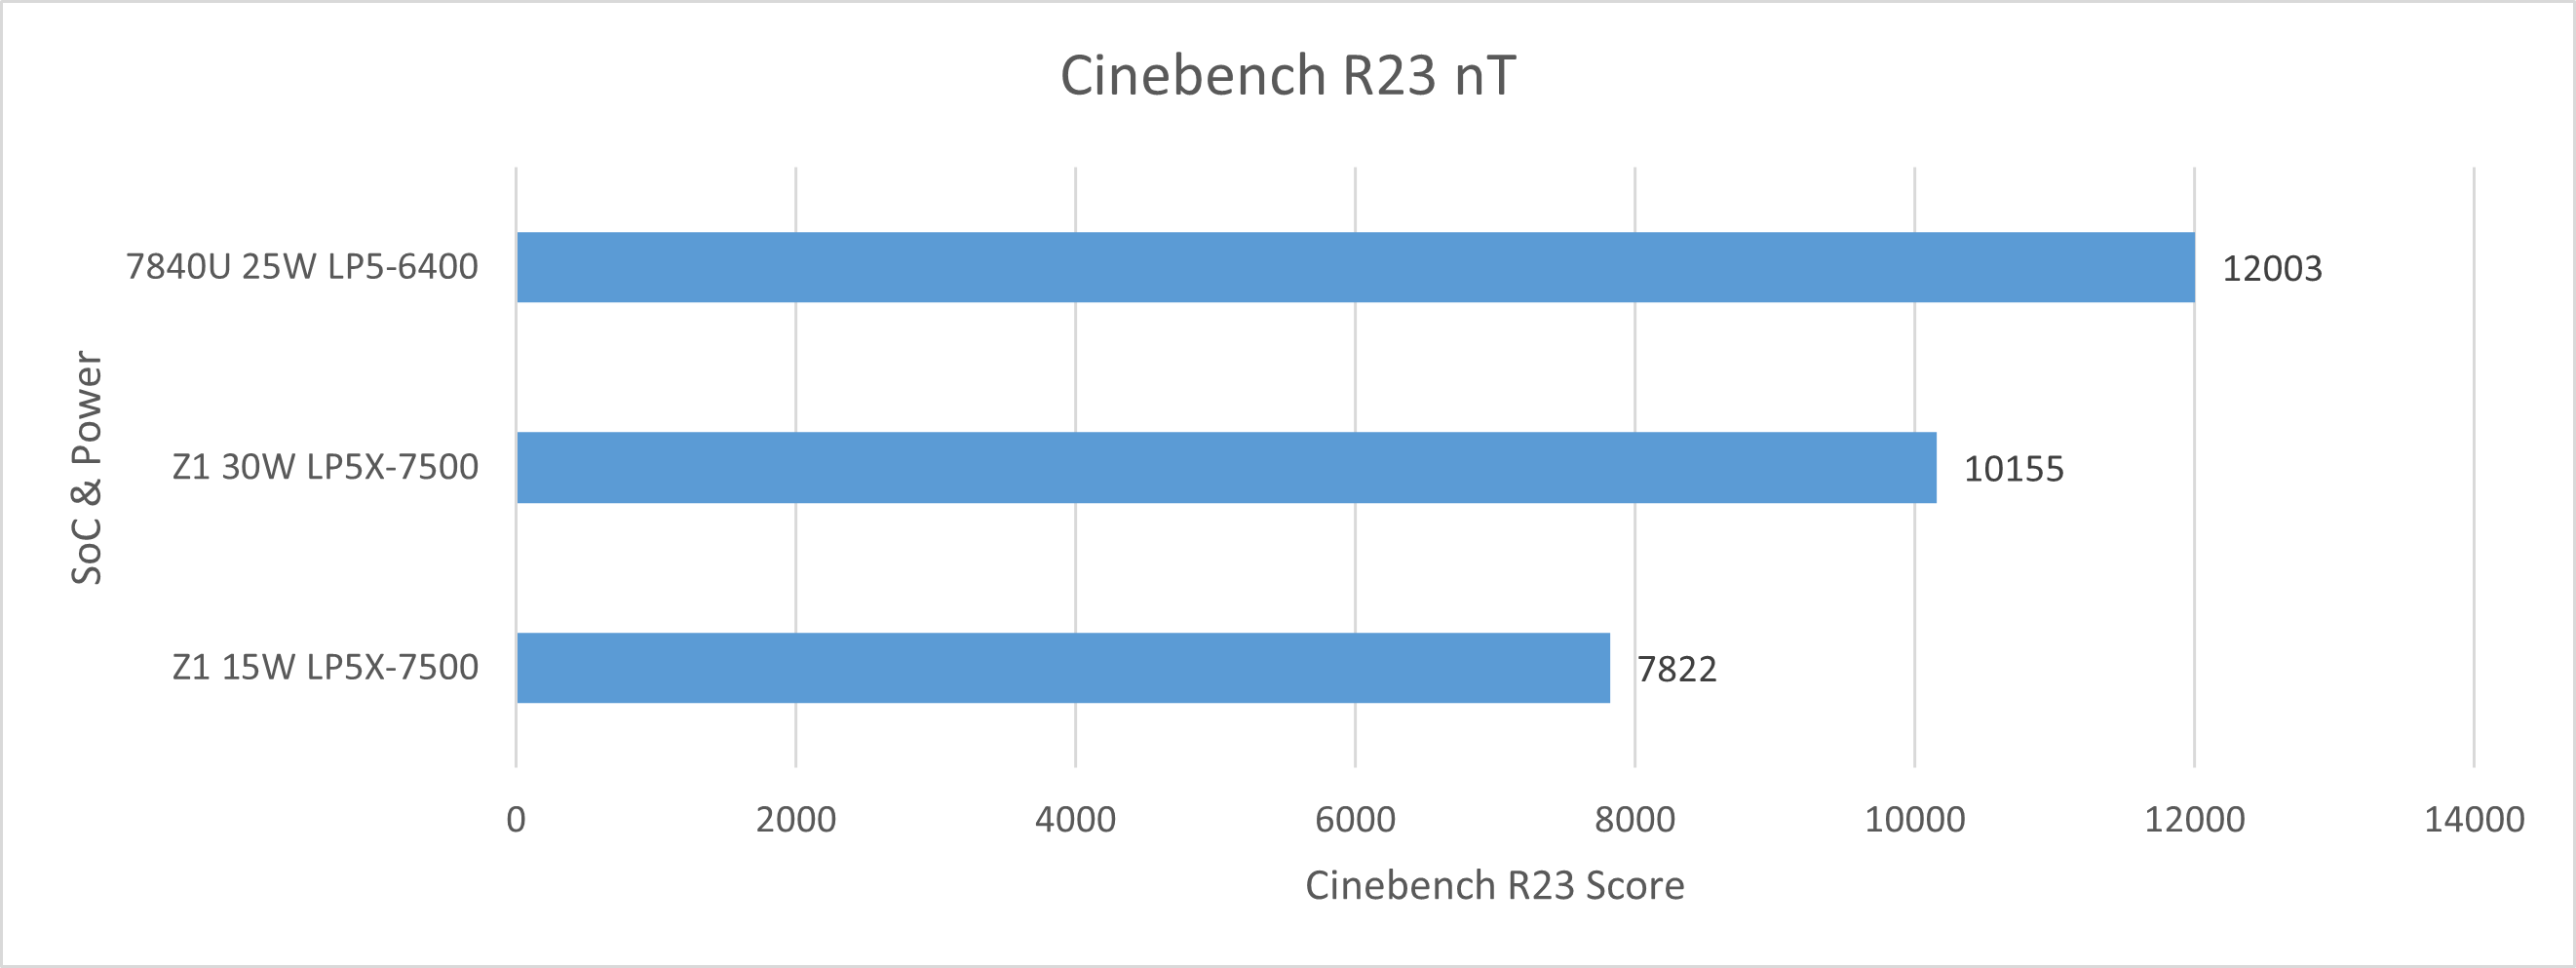 Cinebench R23